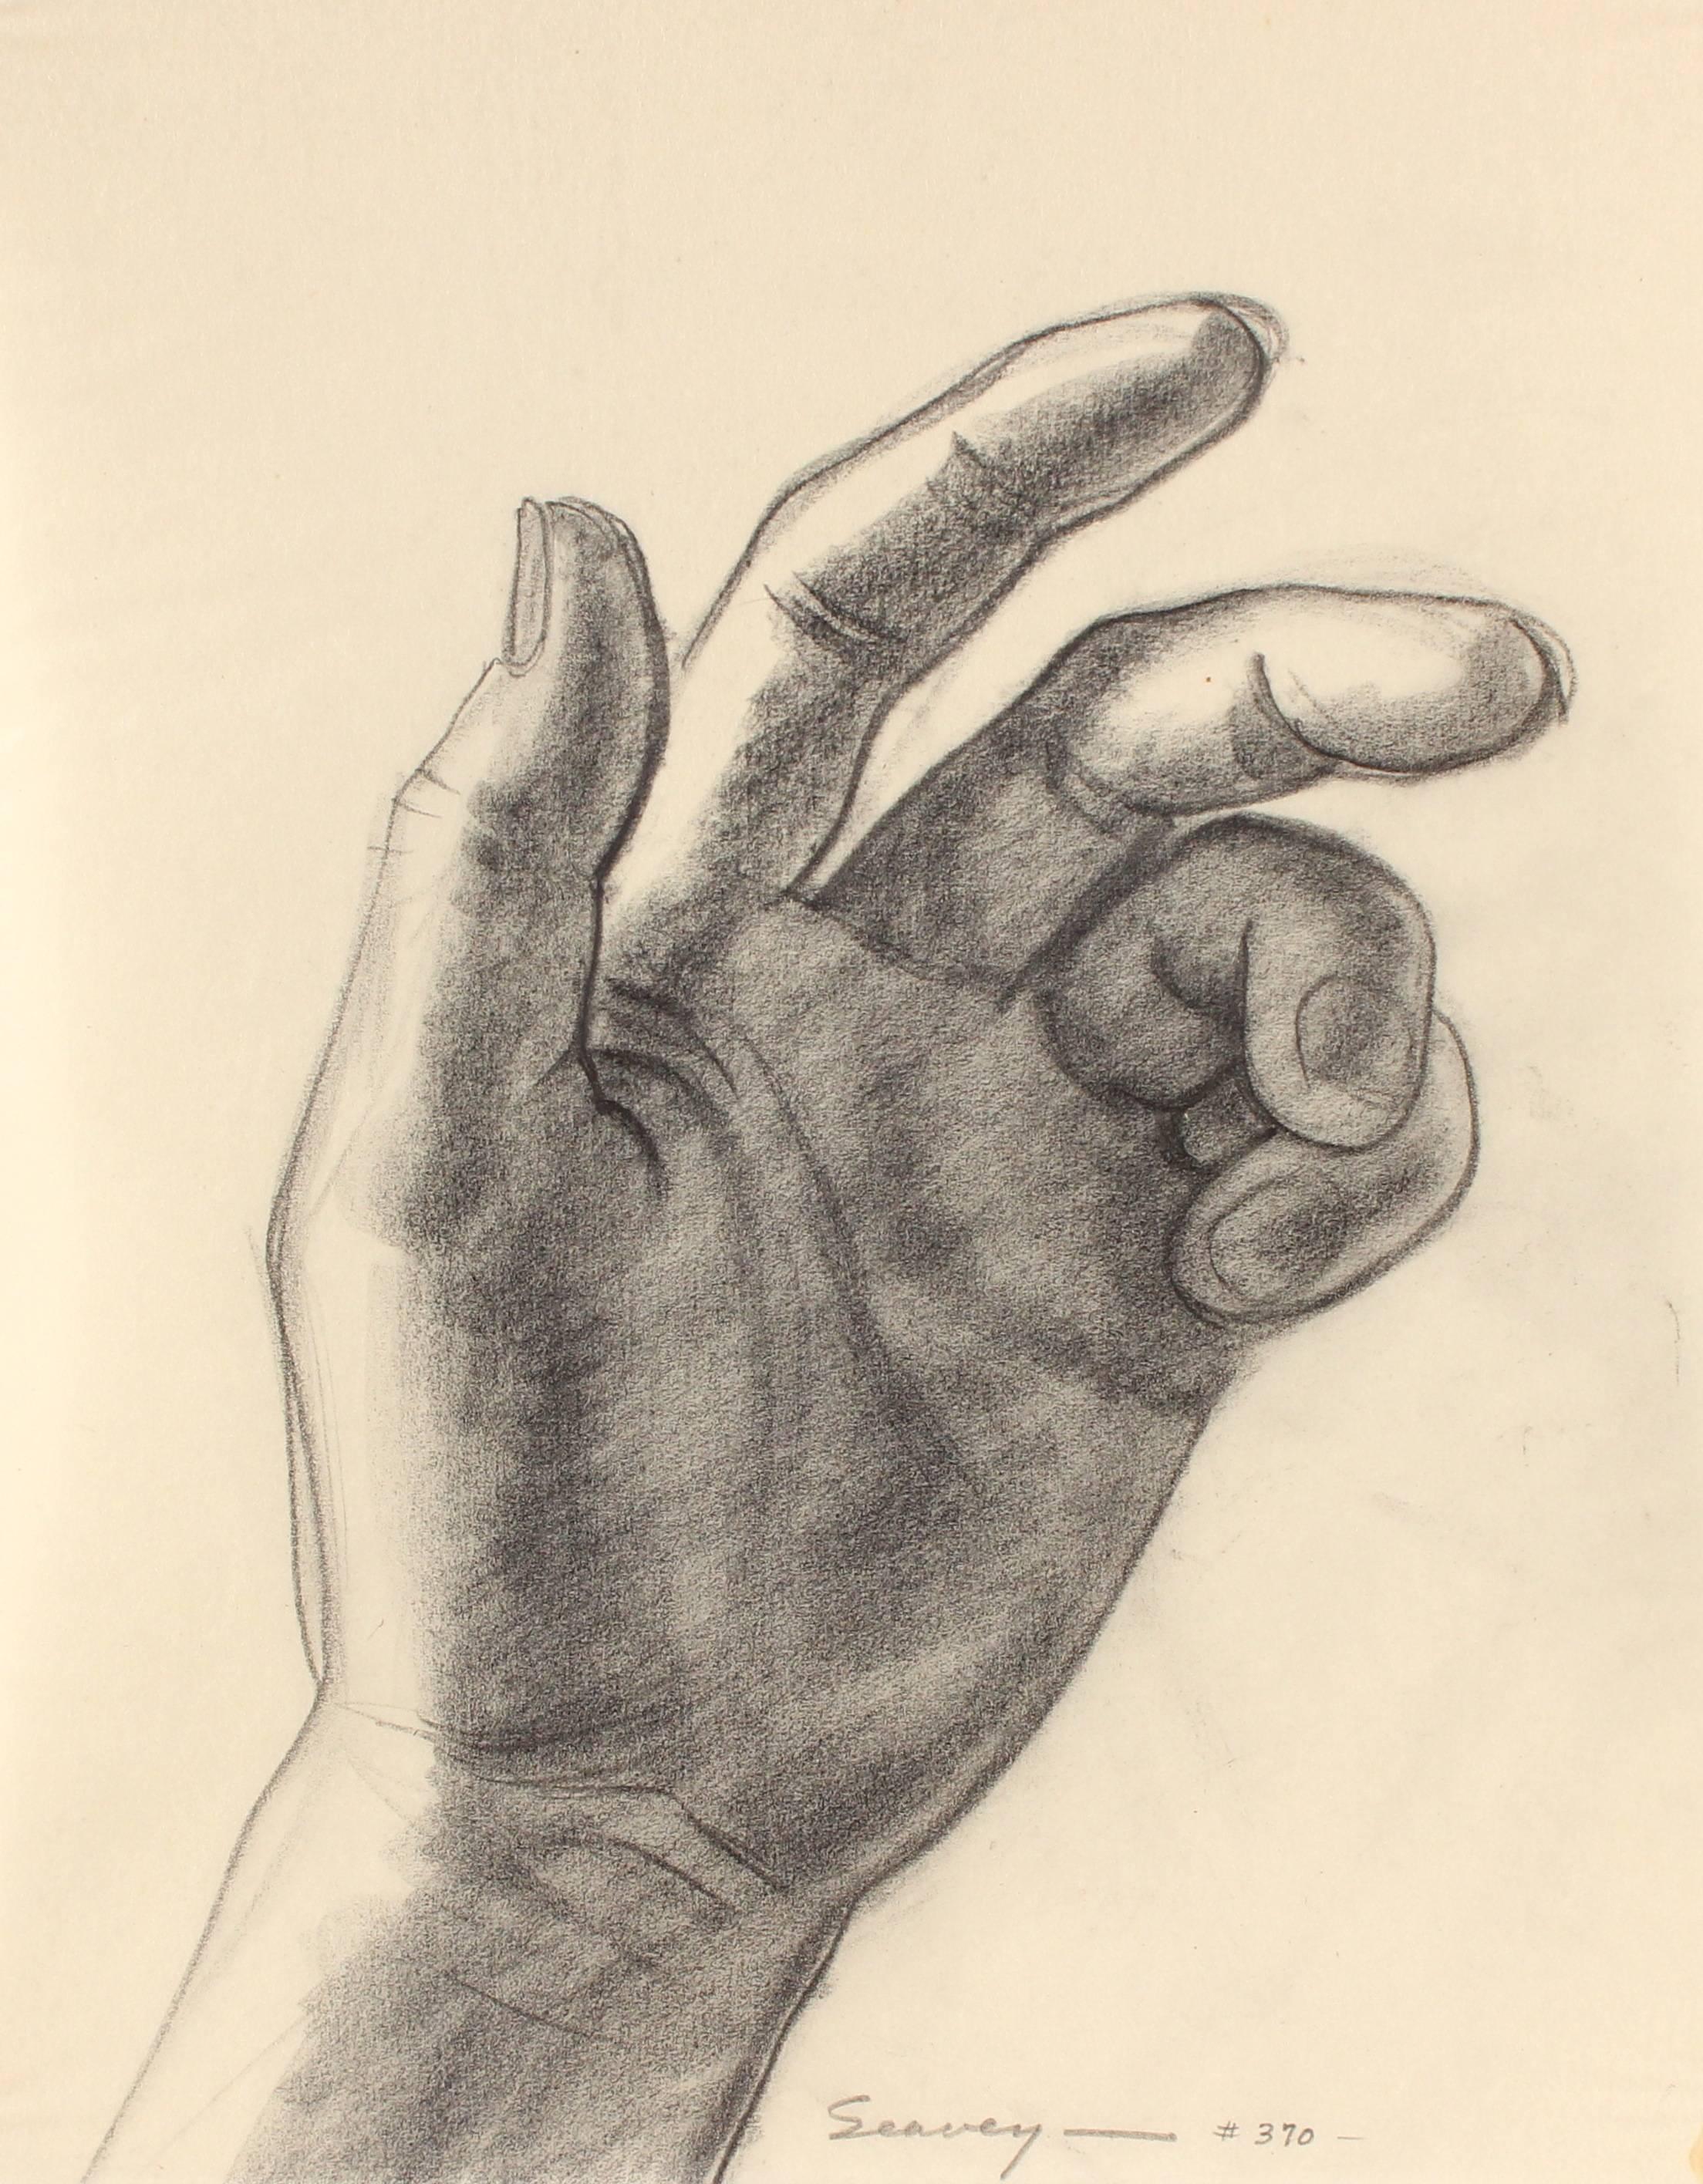 Clyde F. Seavey Sr. Figurative Art - Study of a Hand in Graphite